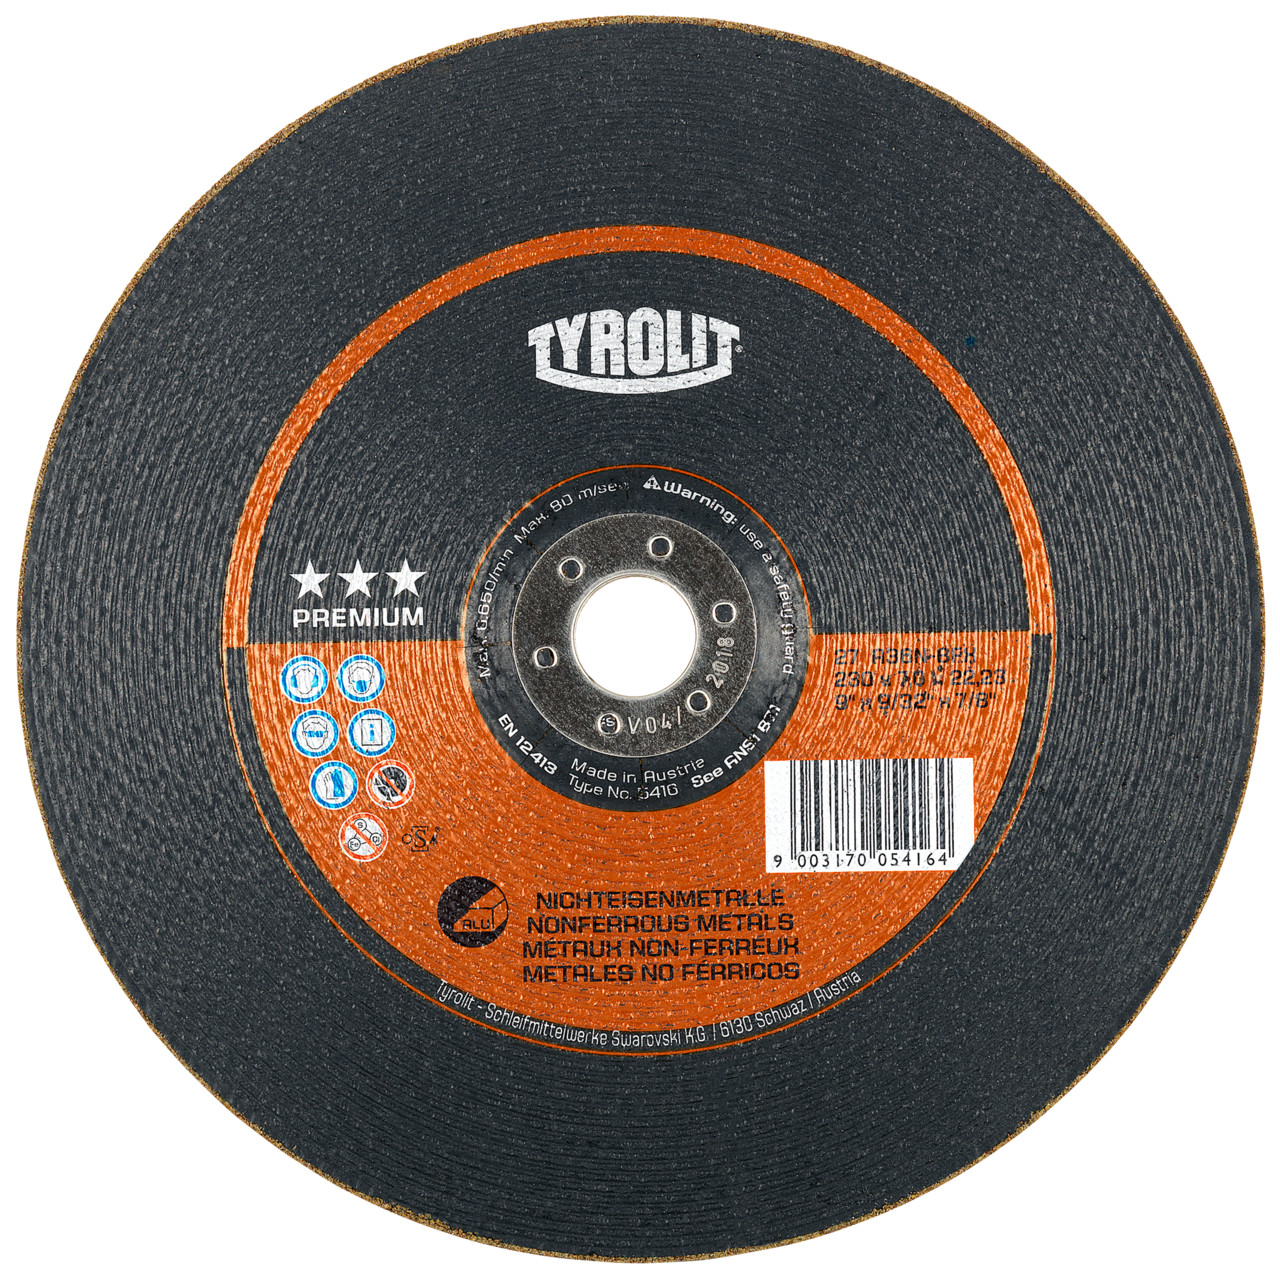 TYROLIT grinding wheel DxUxH 230x7x22.23 For non-ferrous metals, shape: 27 - offset version, Art. 5416